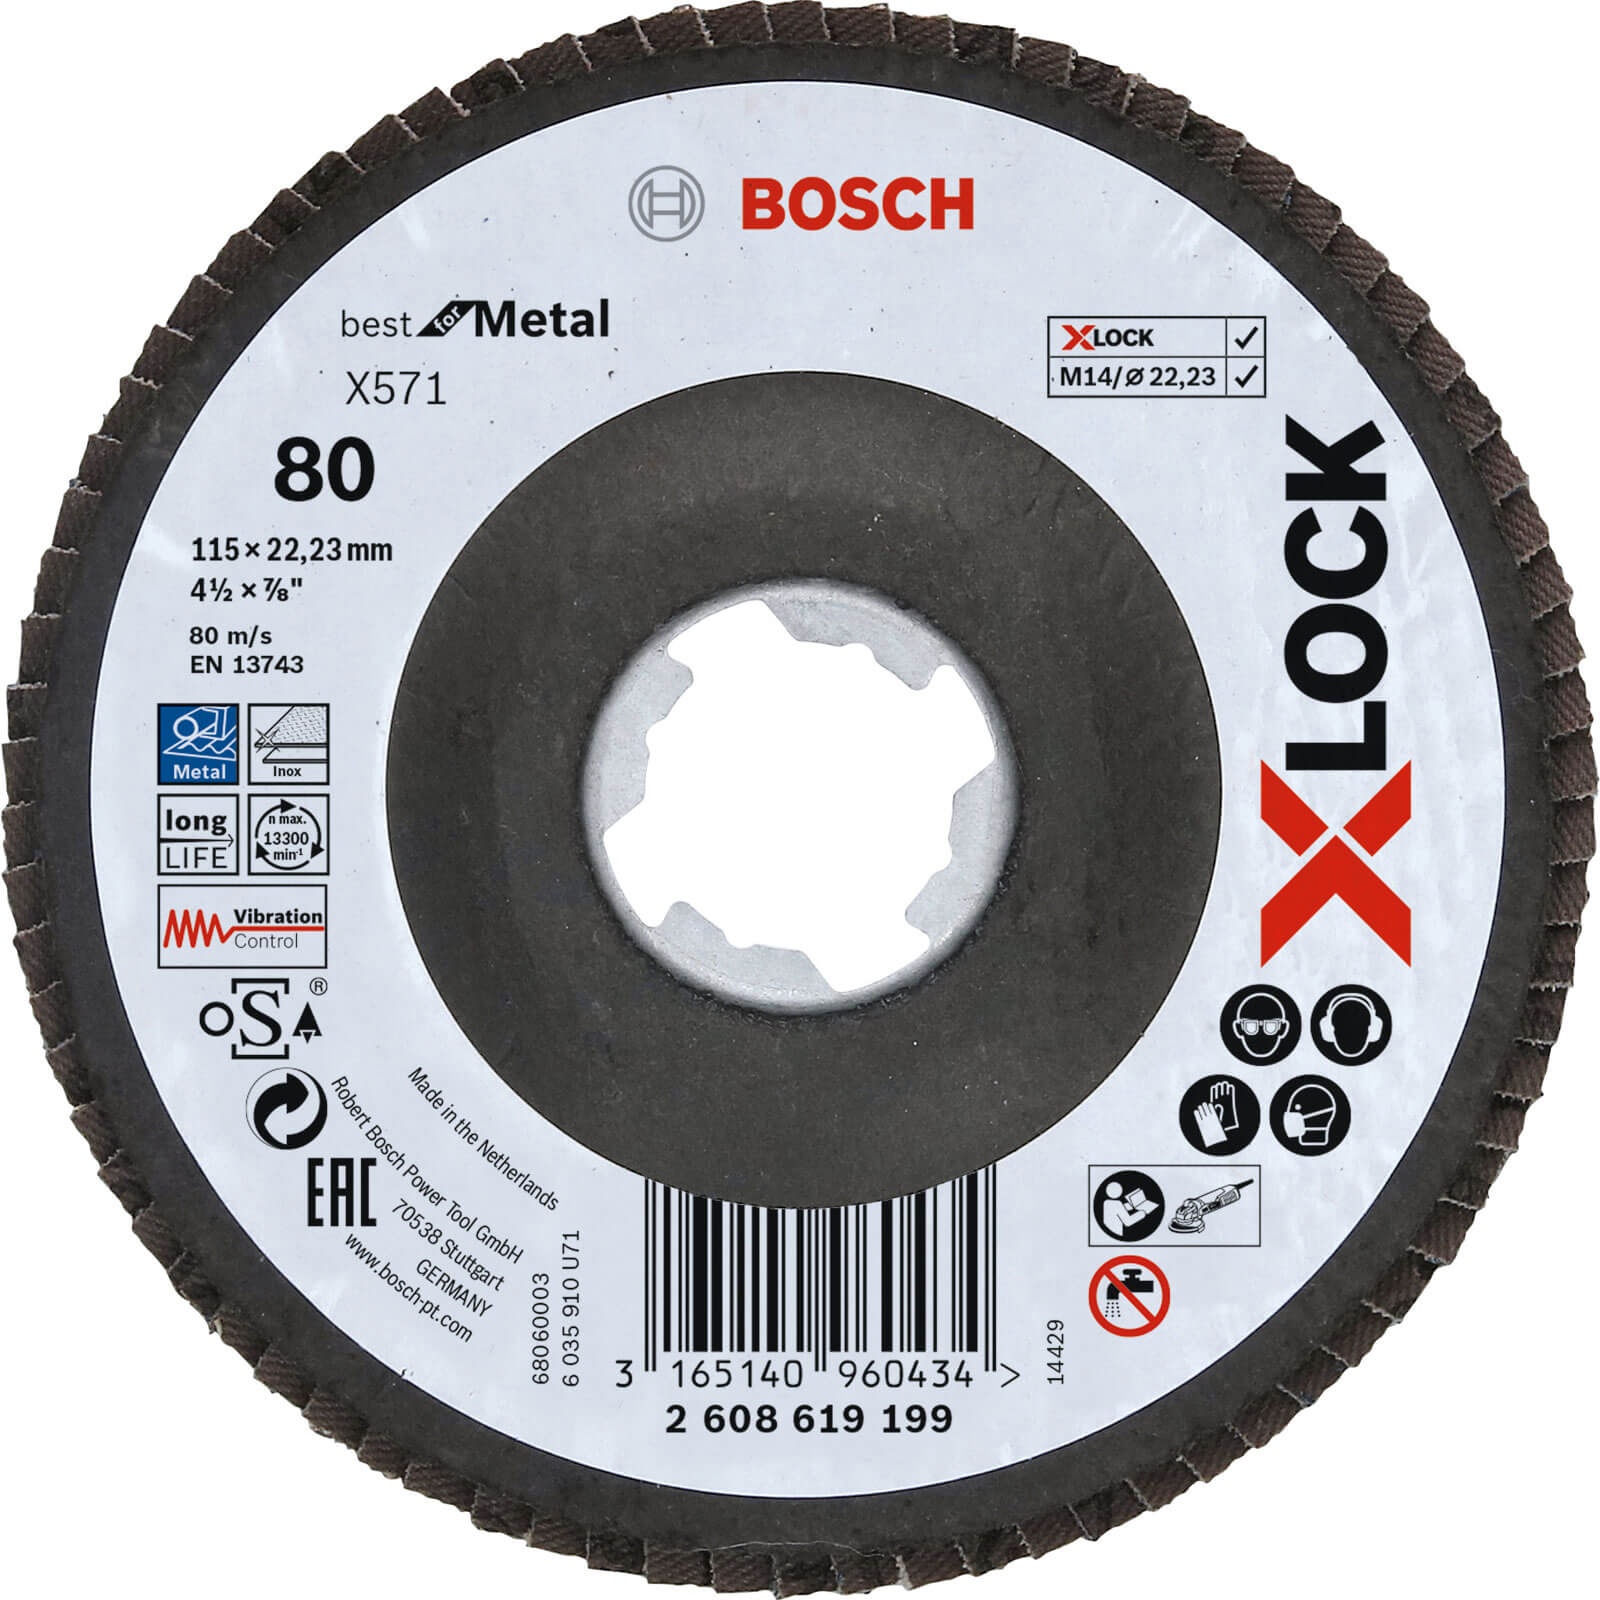 Image of Bosch X Lock Zirconium Abrasive Flap Disc 115mm 80g Pack of 1